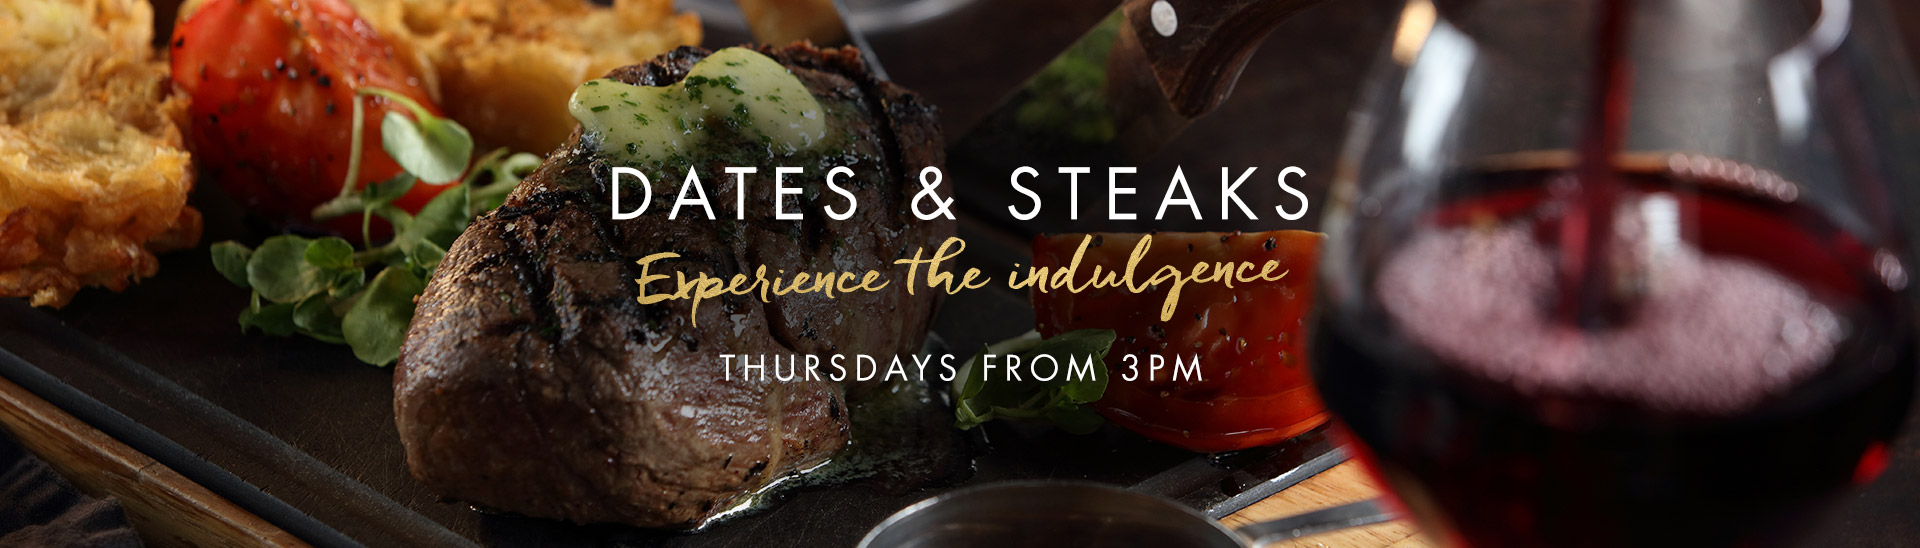 Dates & Steaks at Miller & Carter Birmingham Hagley Road